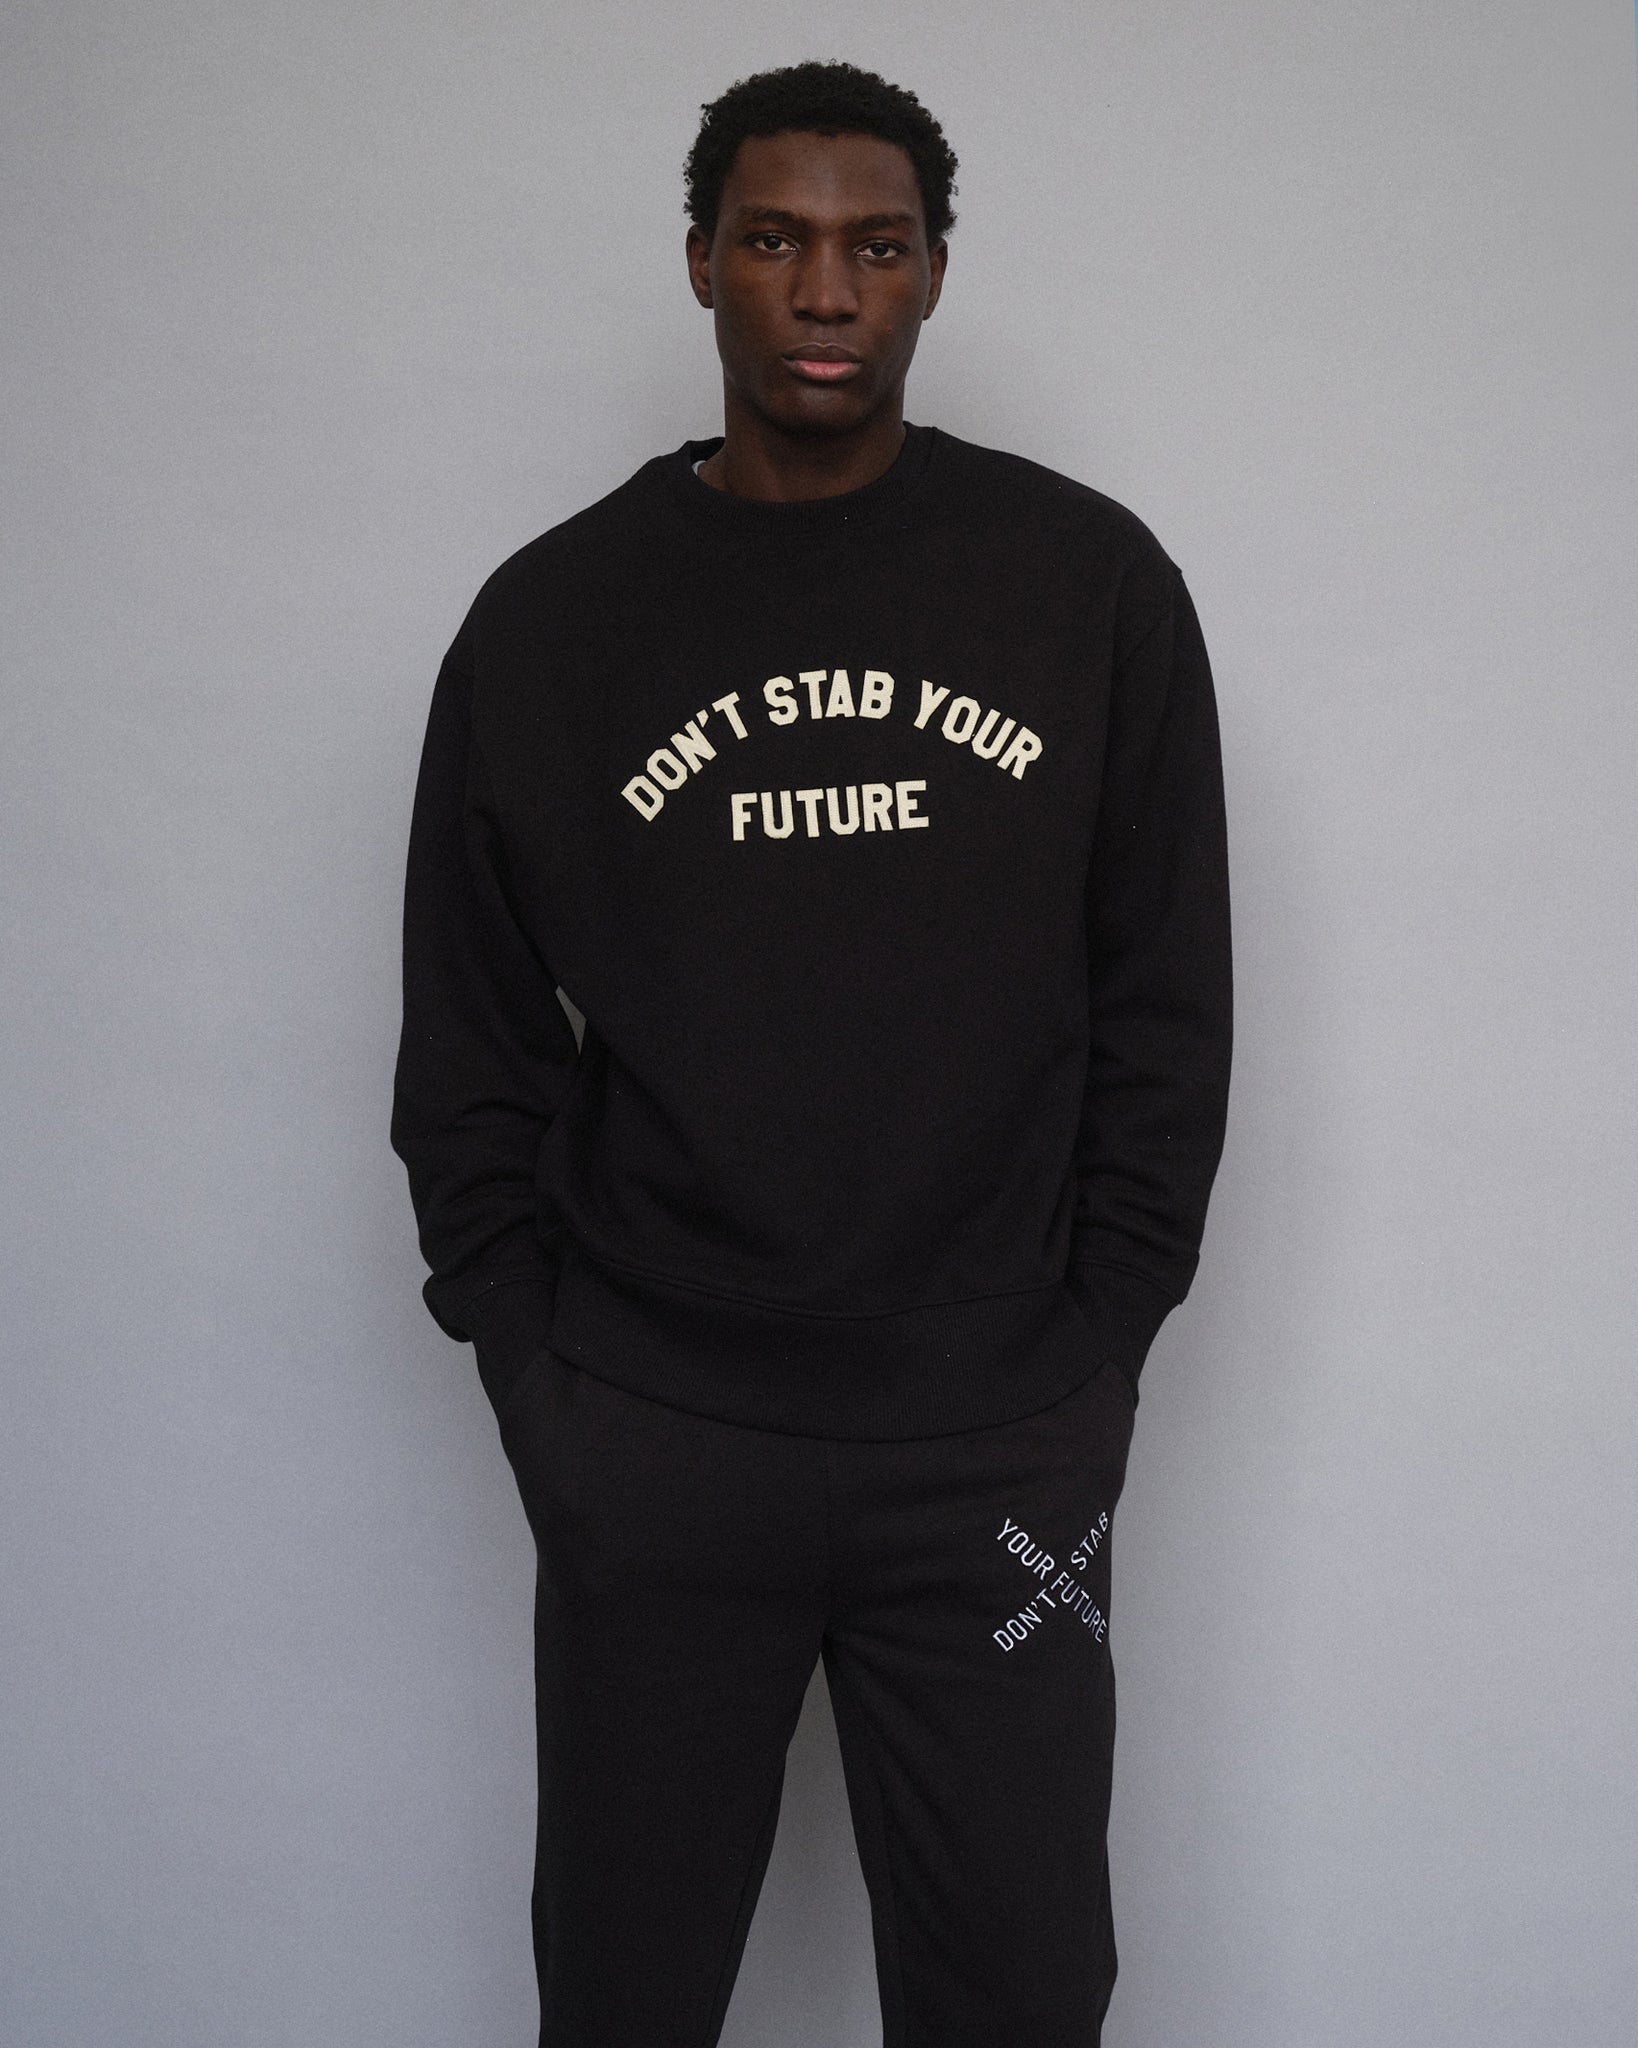 DSYF "Collegiate" Nero Black Sweatshirt